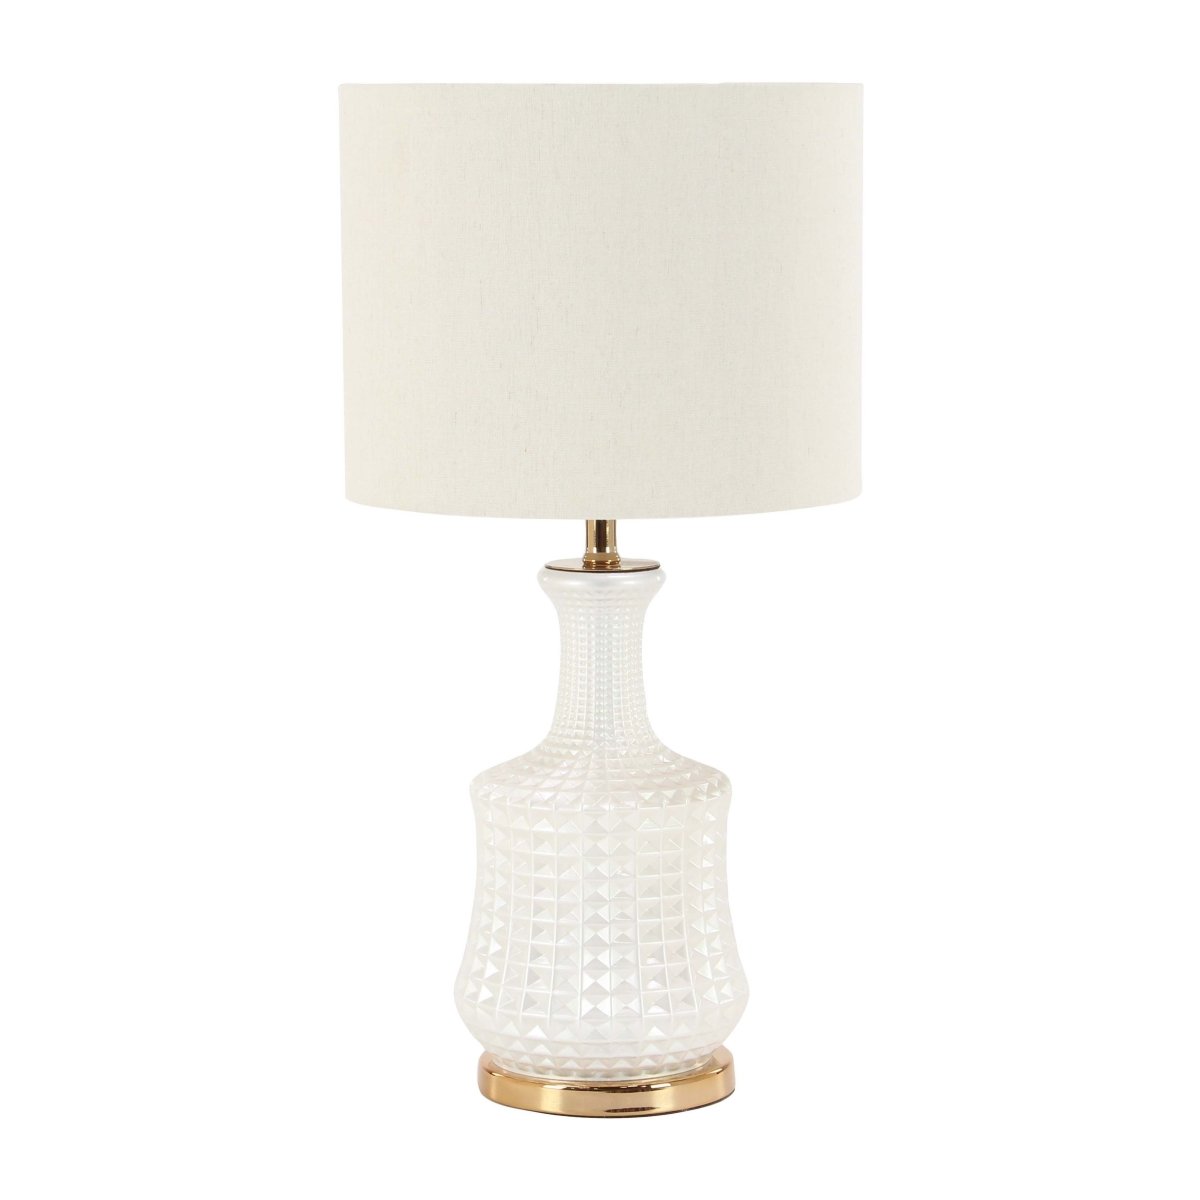 Urban Designs 7787993 Carmel Gloss Table Lamp, White & Gold